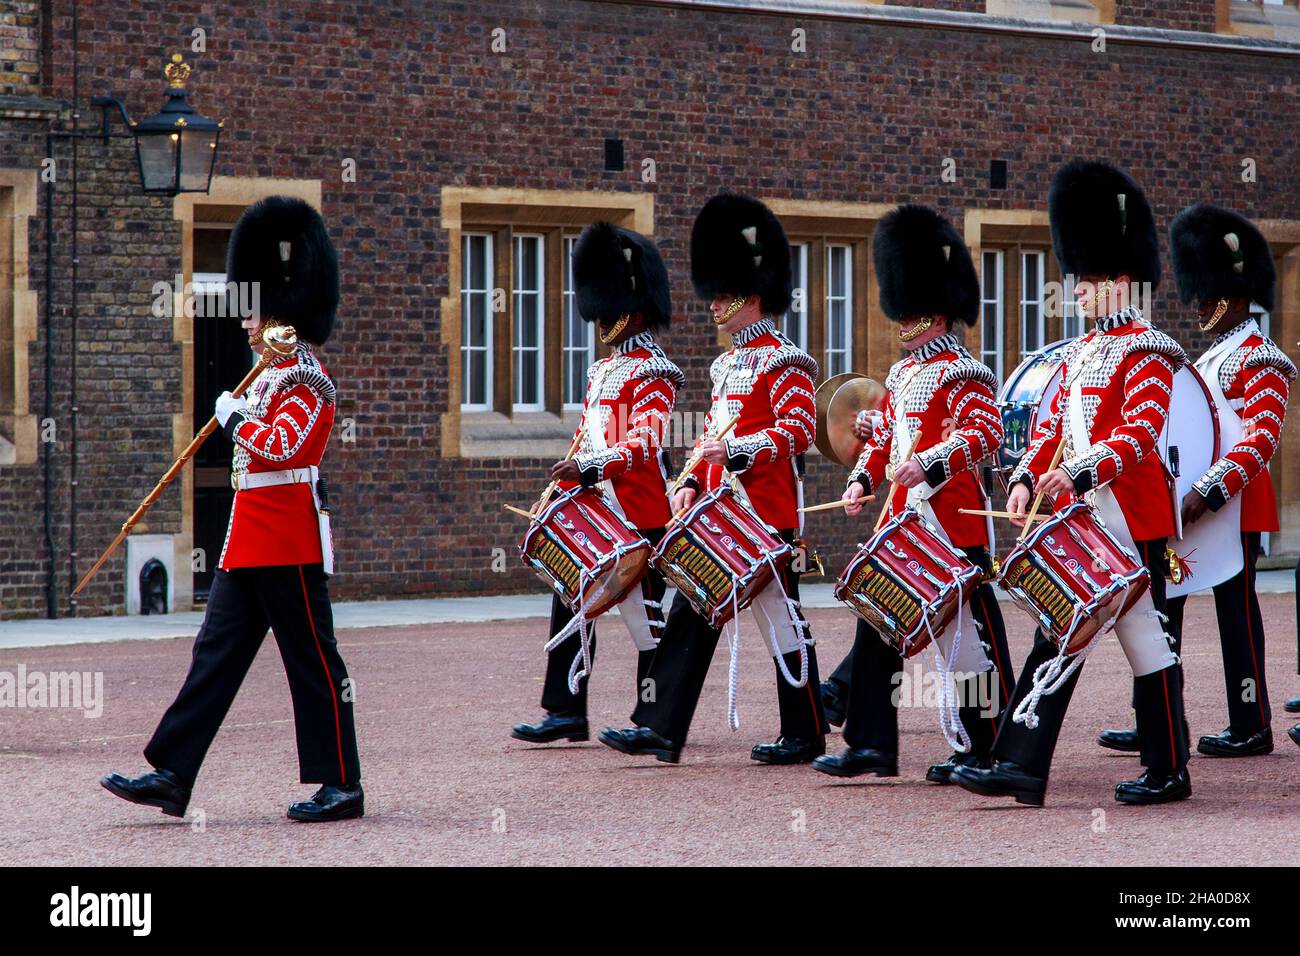 LONDON, GROSSBRITANNIEN - 12. MAI 2014: Das Militärorchester der Royal Guard marschiert zum Wachwechsel am Buckingham Palace. Stockfoto